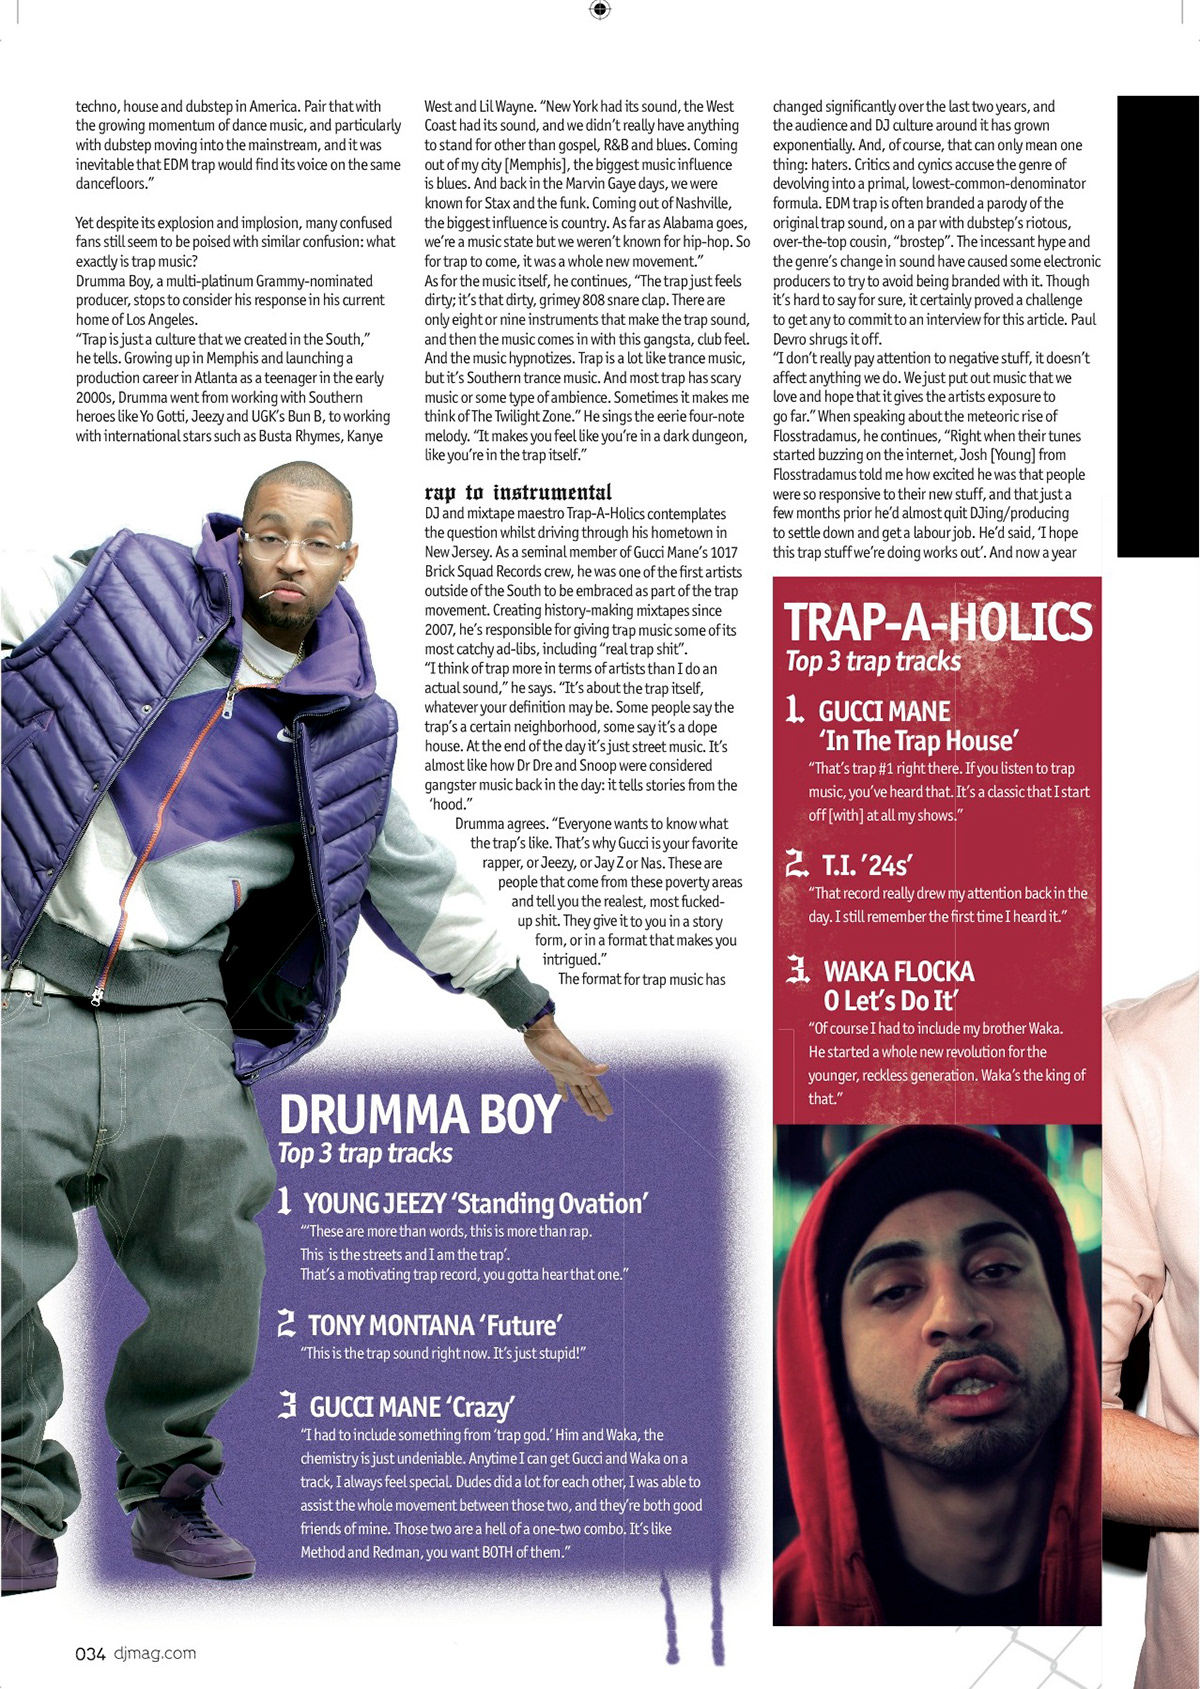 Trap Music DJ Magazine DJ culture edm EDM Trap Drumma Boy Trap-A-Holics mad decent baauer Flosstradamus Sinden